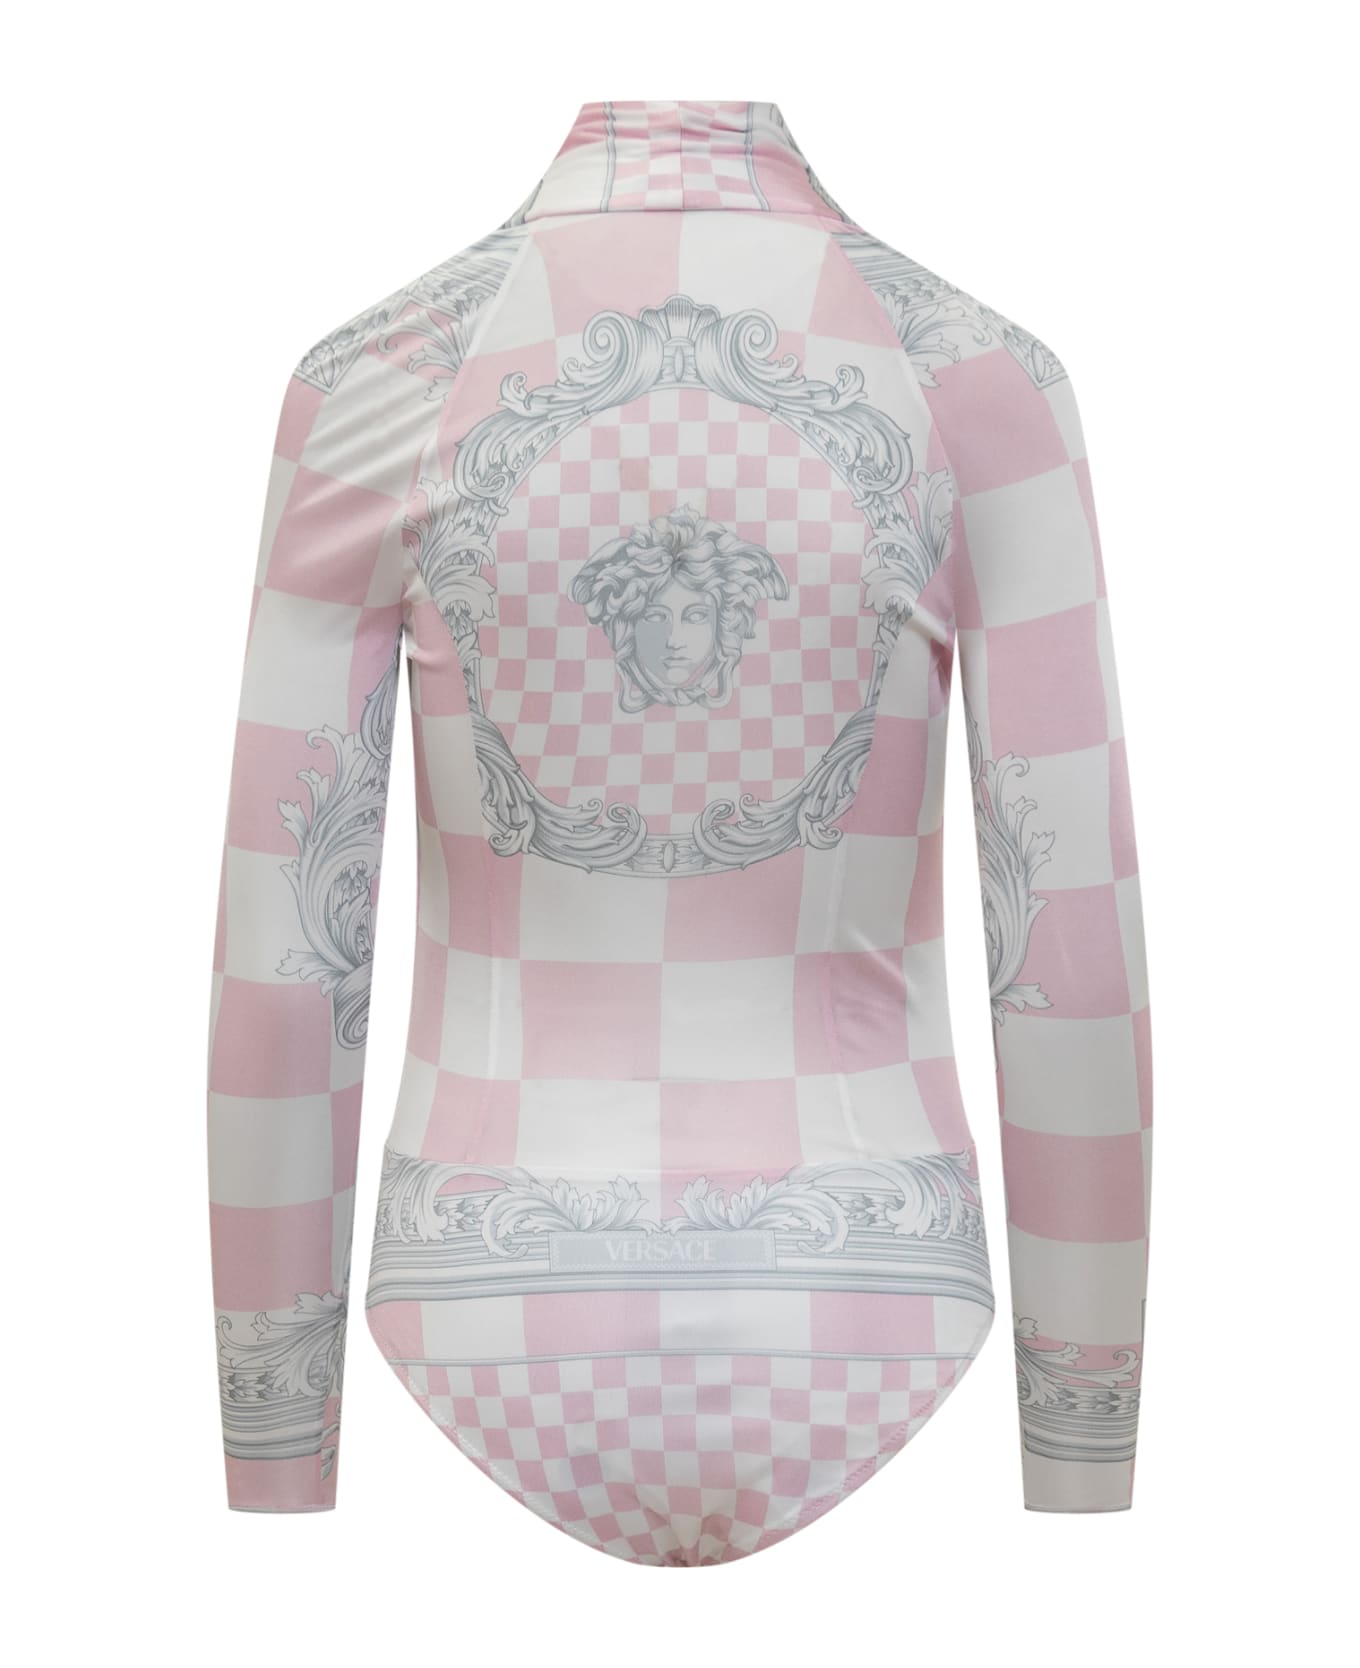 Versace Bodysuit With Medusa Motif - Pastel pink + white + silver ボディスーツ